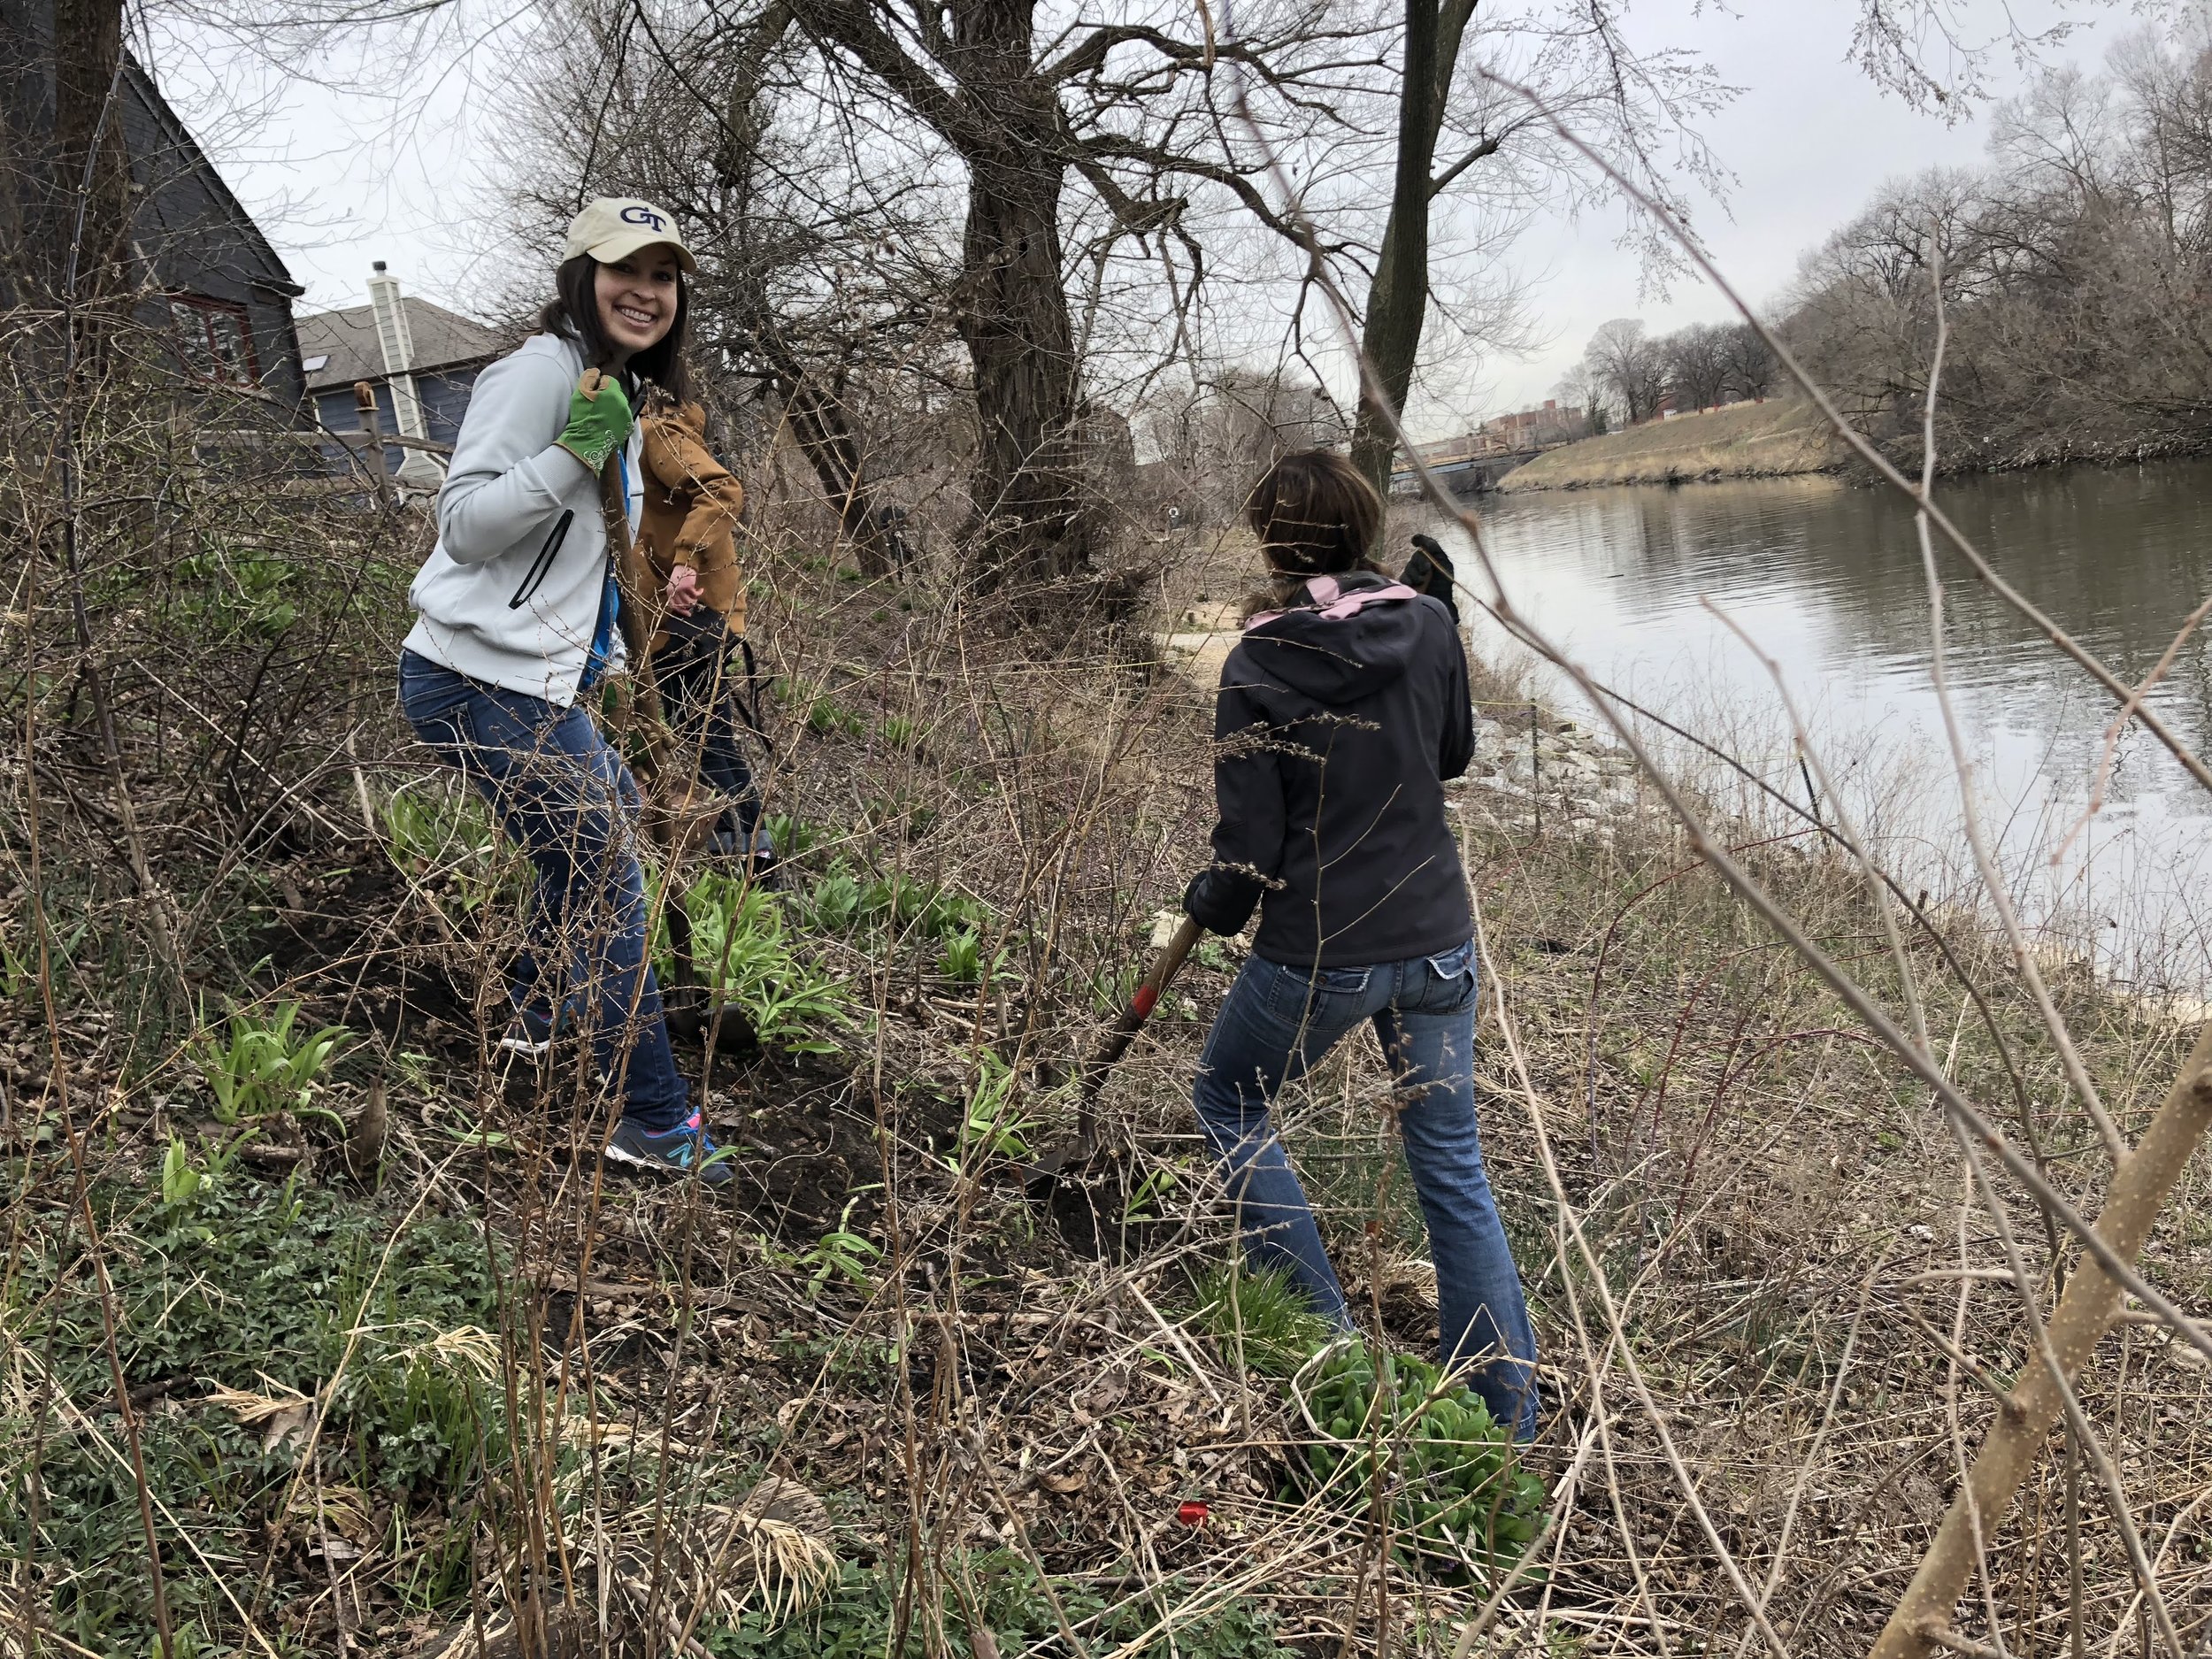 Volunteers remove invasive plants from the Horner Park riverbank